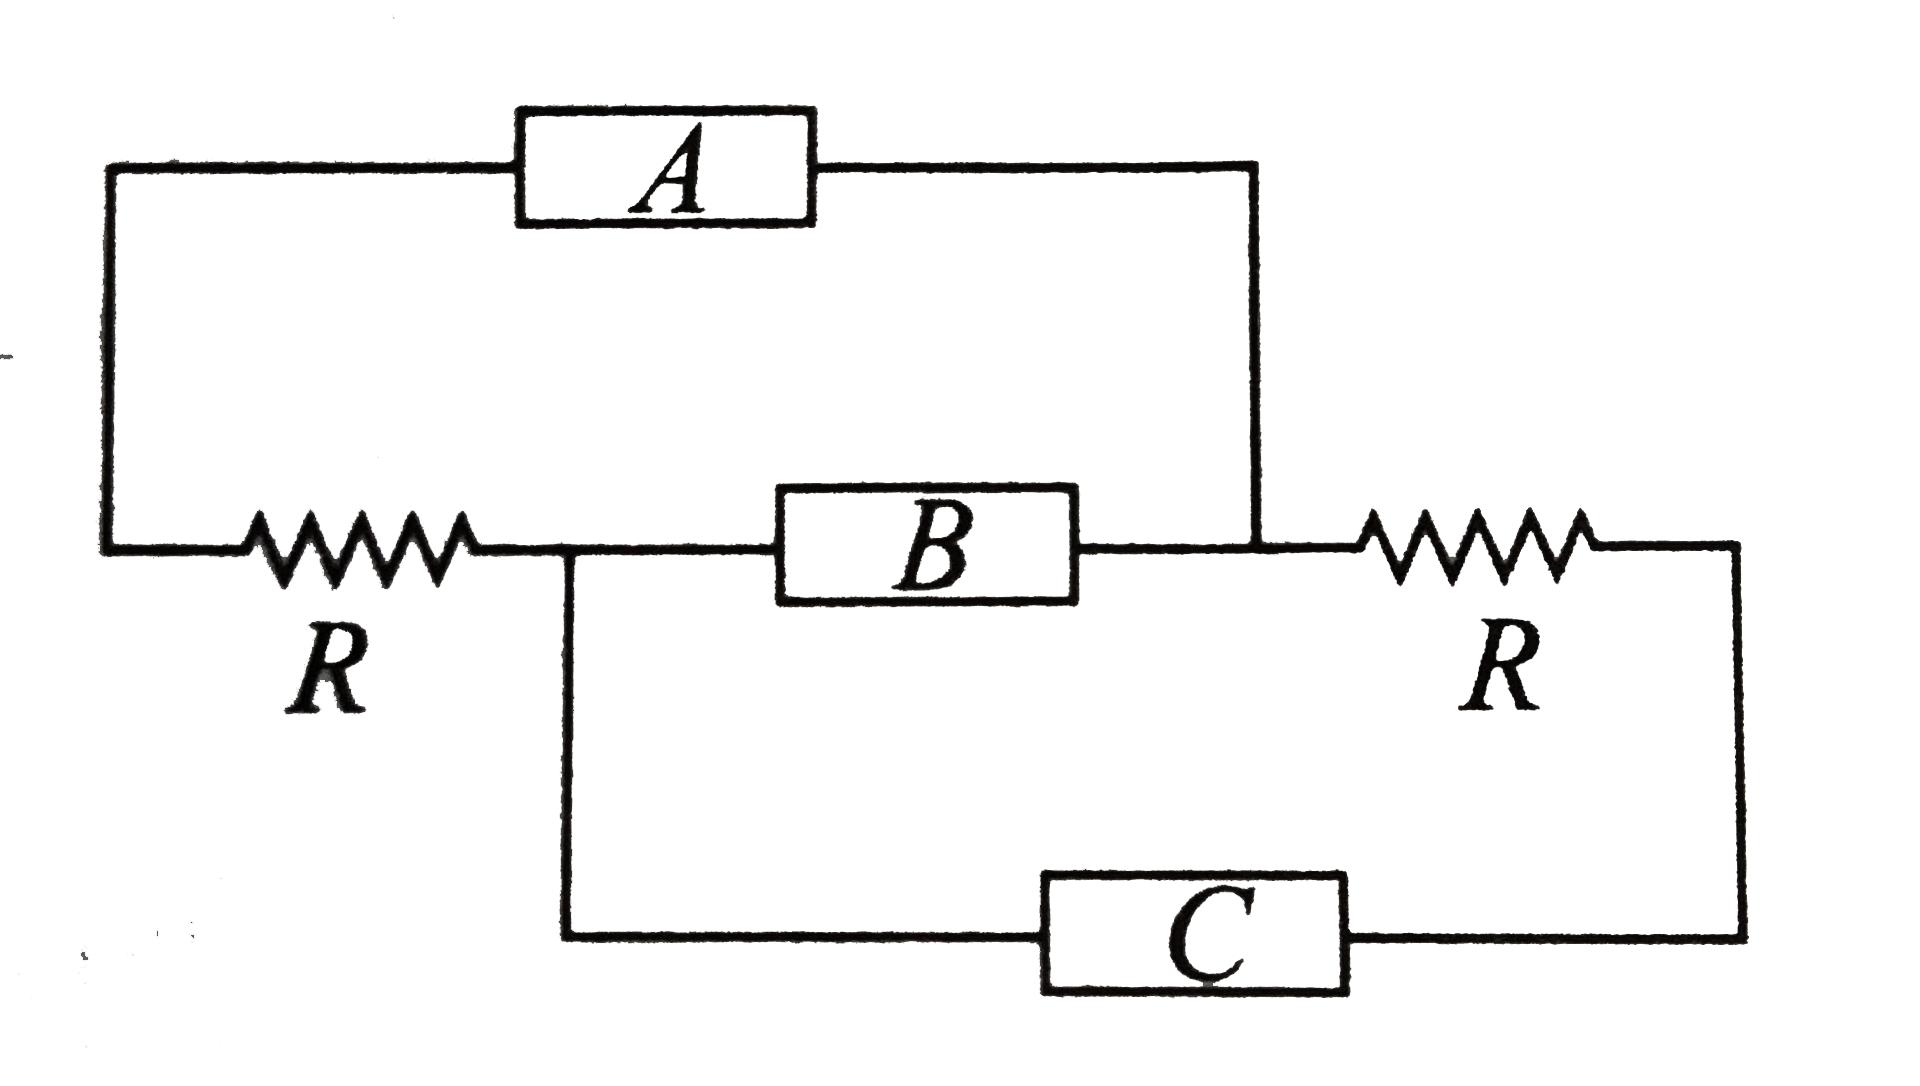 A circuit is shown below.